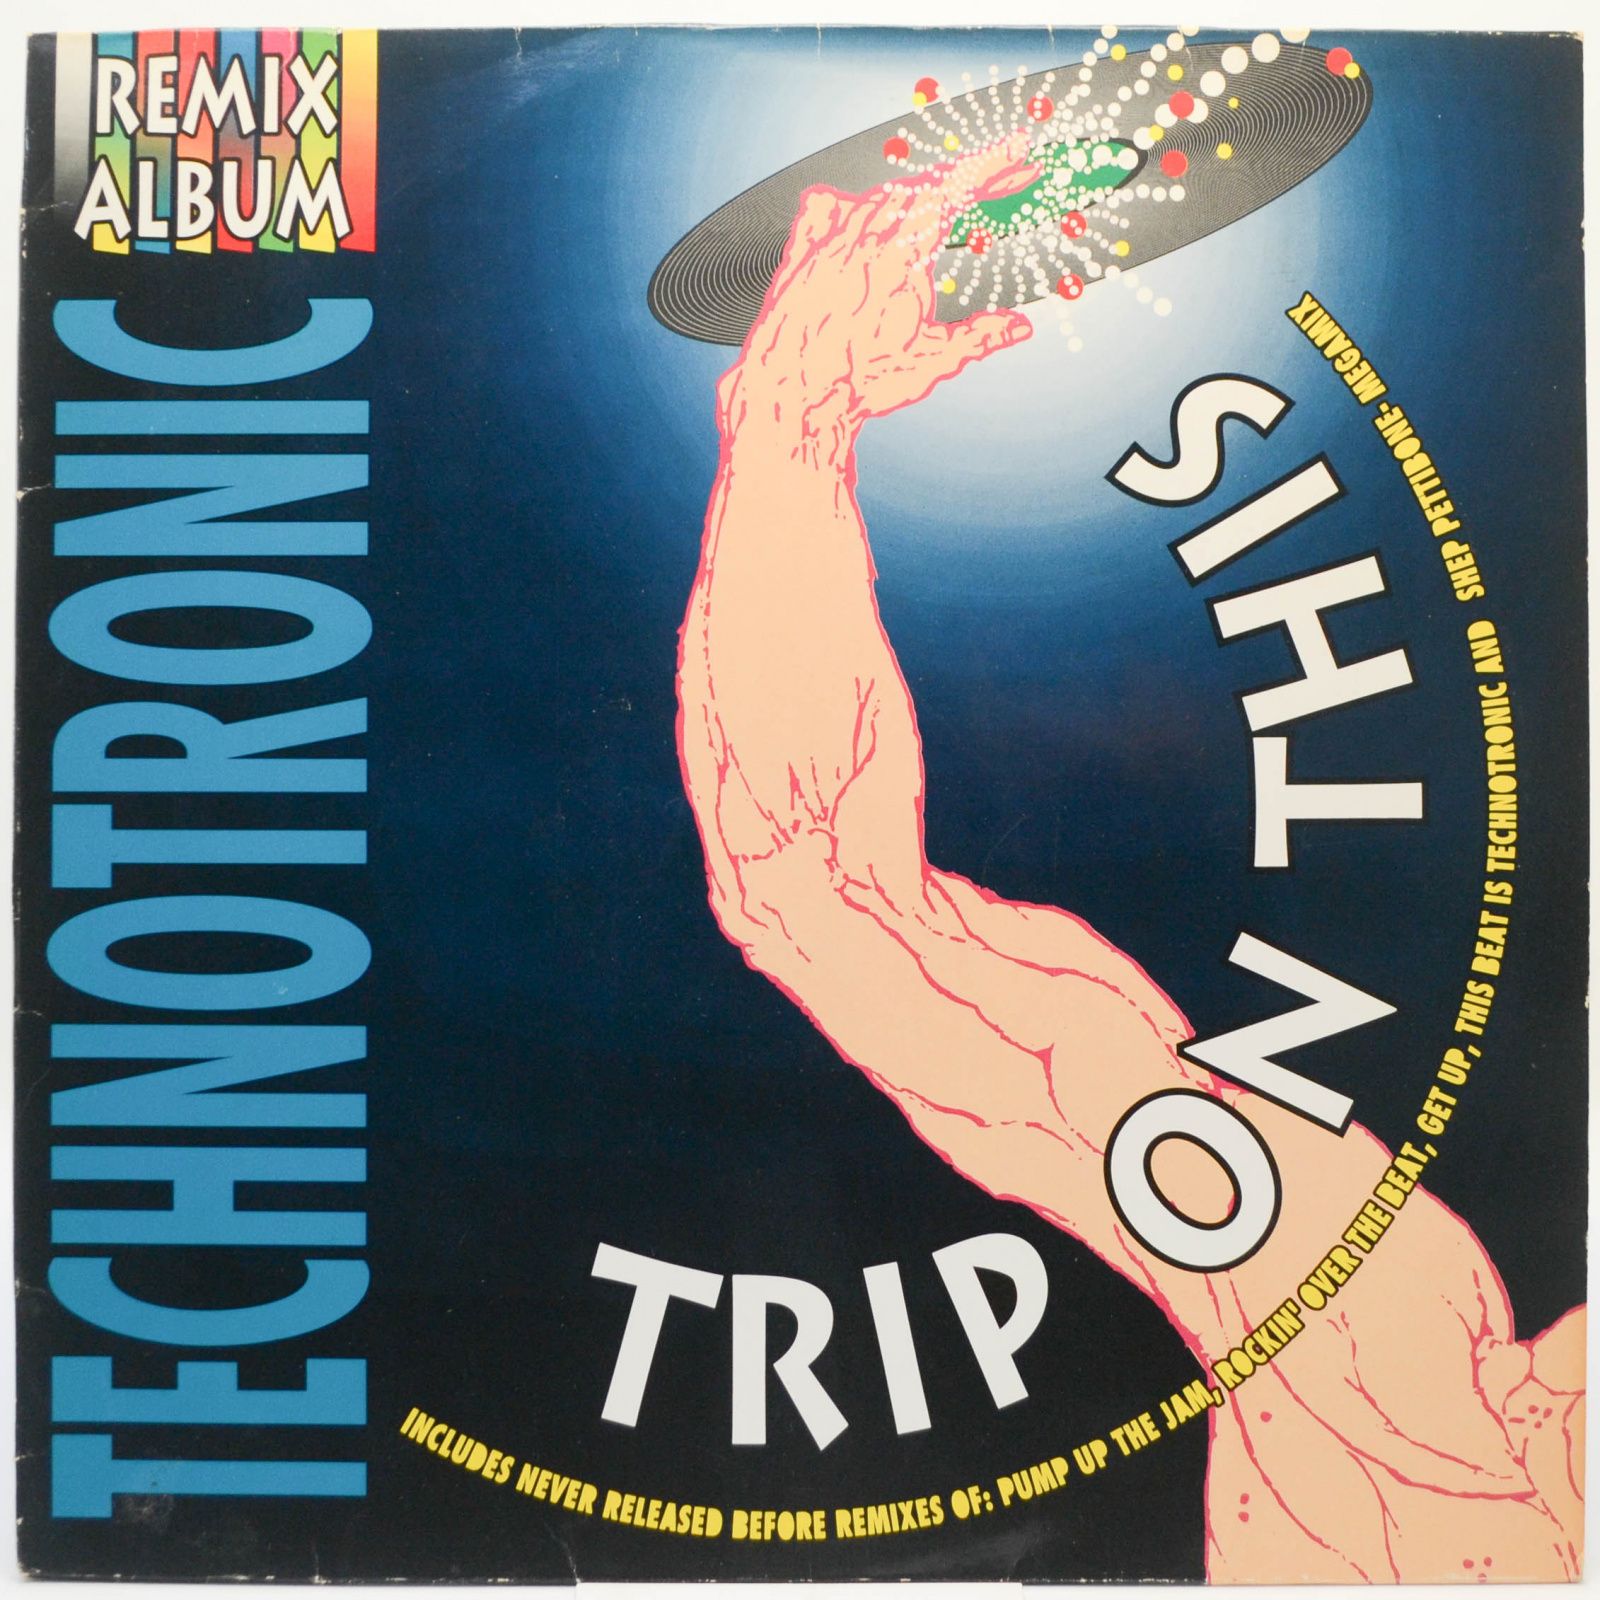 Technotronic — Trip On This (Remix Album), 1990